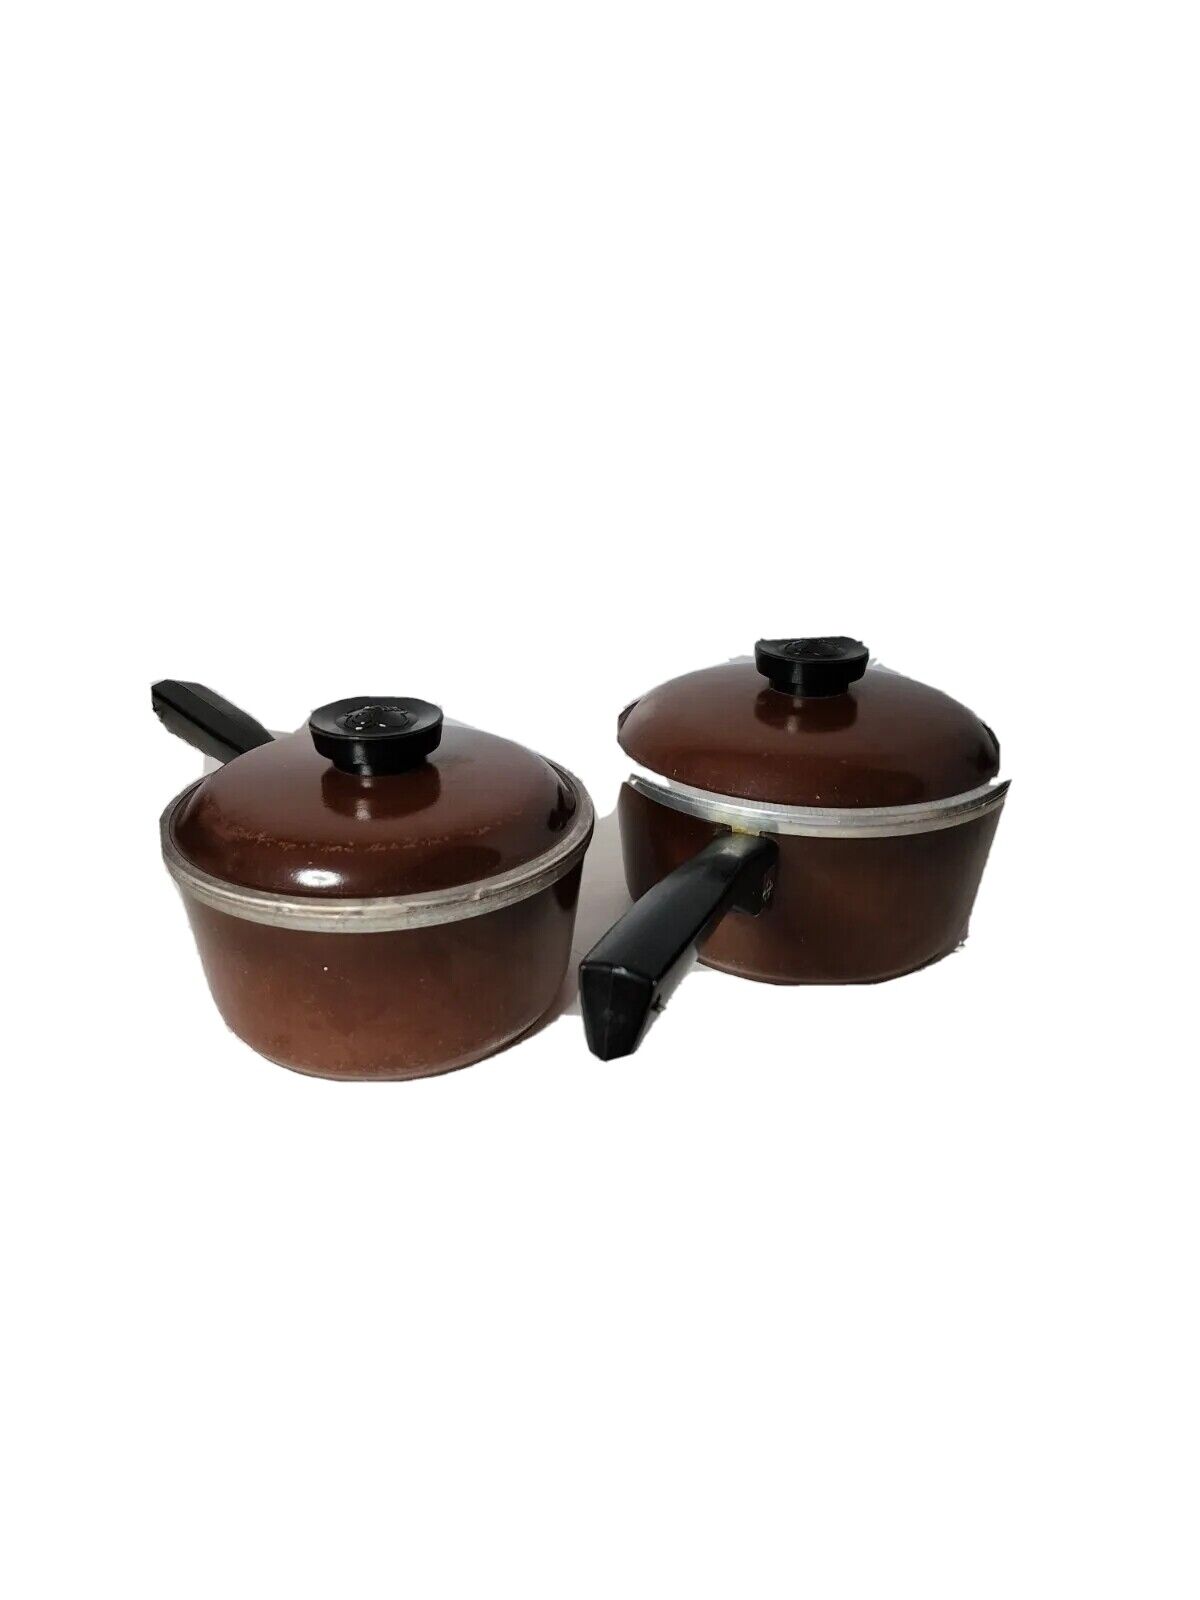 Vintage Club pans brown mod century modern with lids